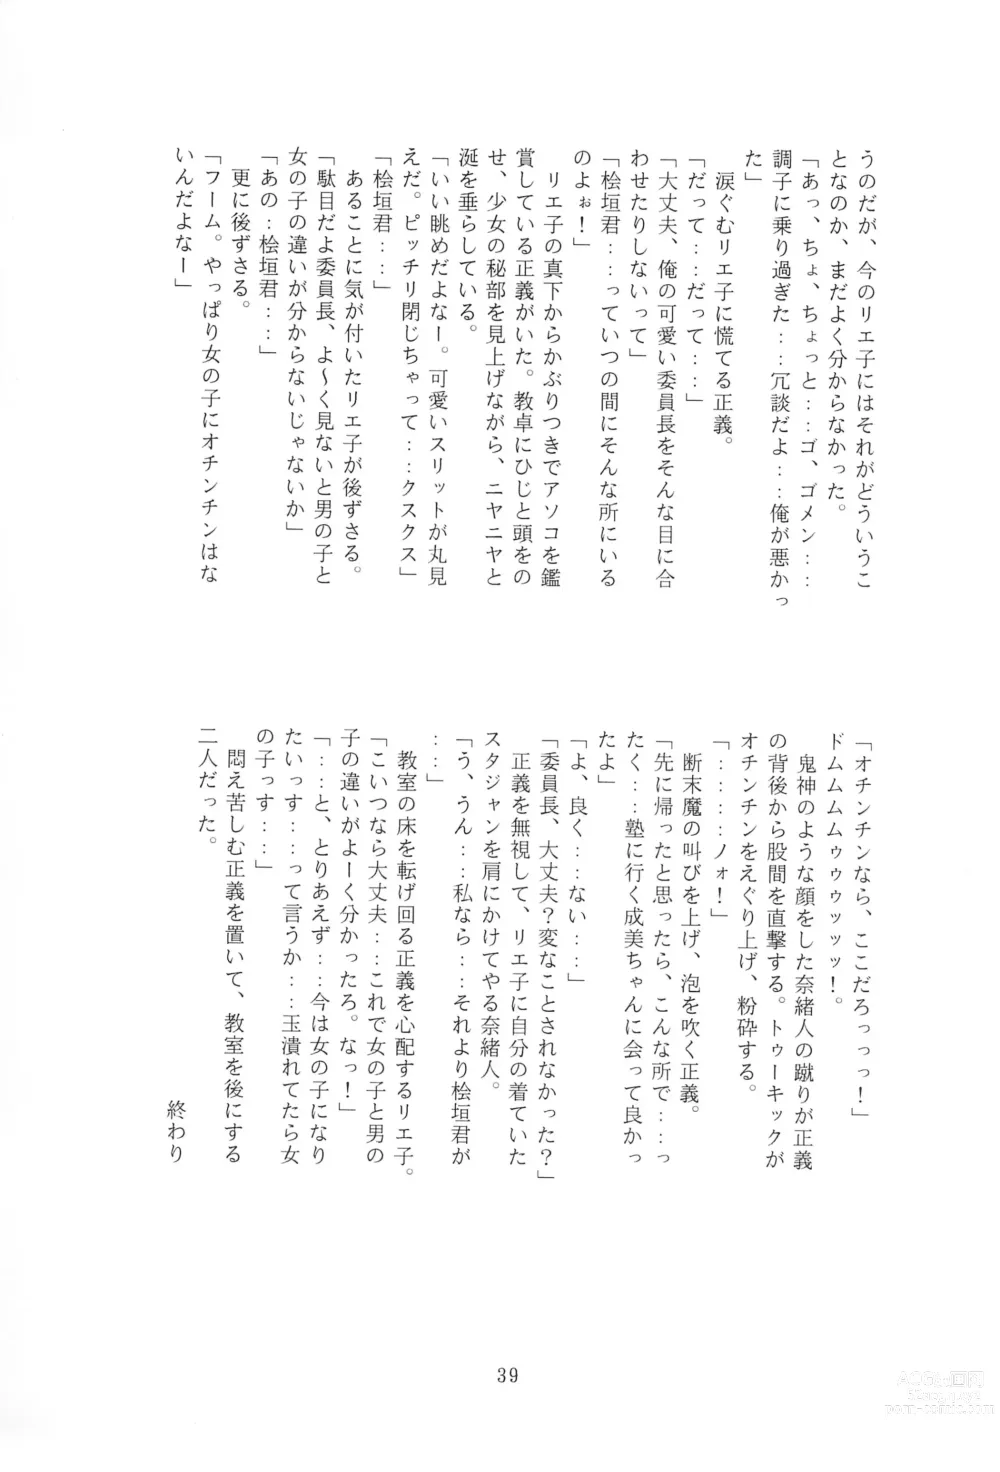 Page 39 of doujinshi JANGLE ONI Mermaid